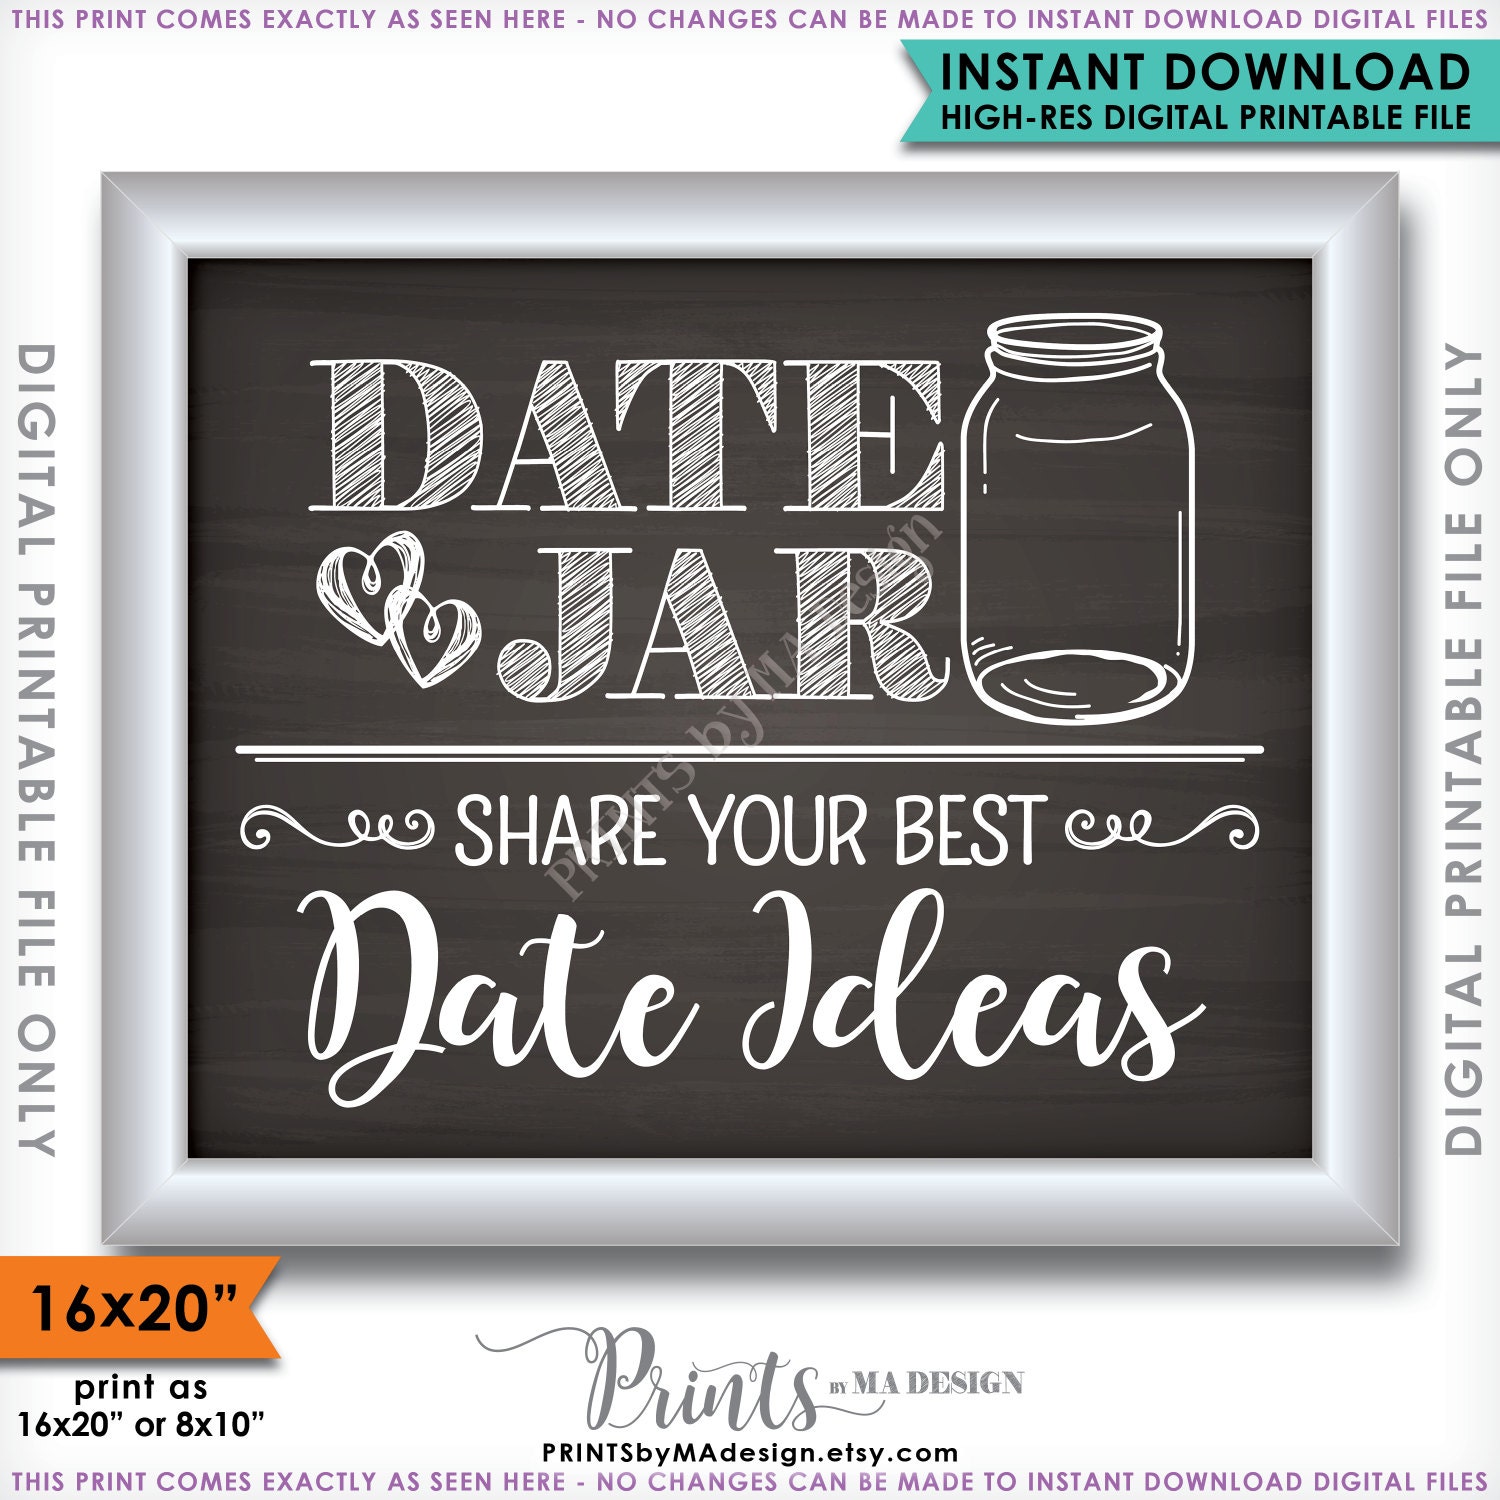 date-jar-sign-date-ideas-jar-share-your-best-date-ideas-wedding-sign-chalkboard-style-16x20